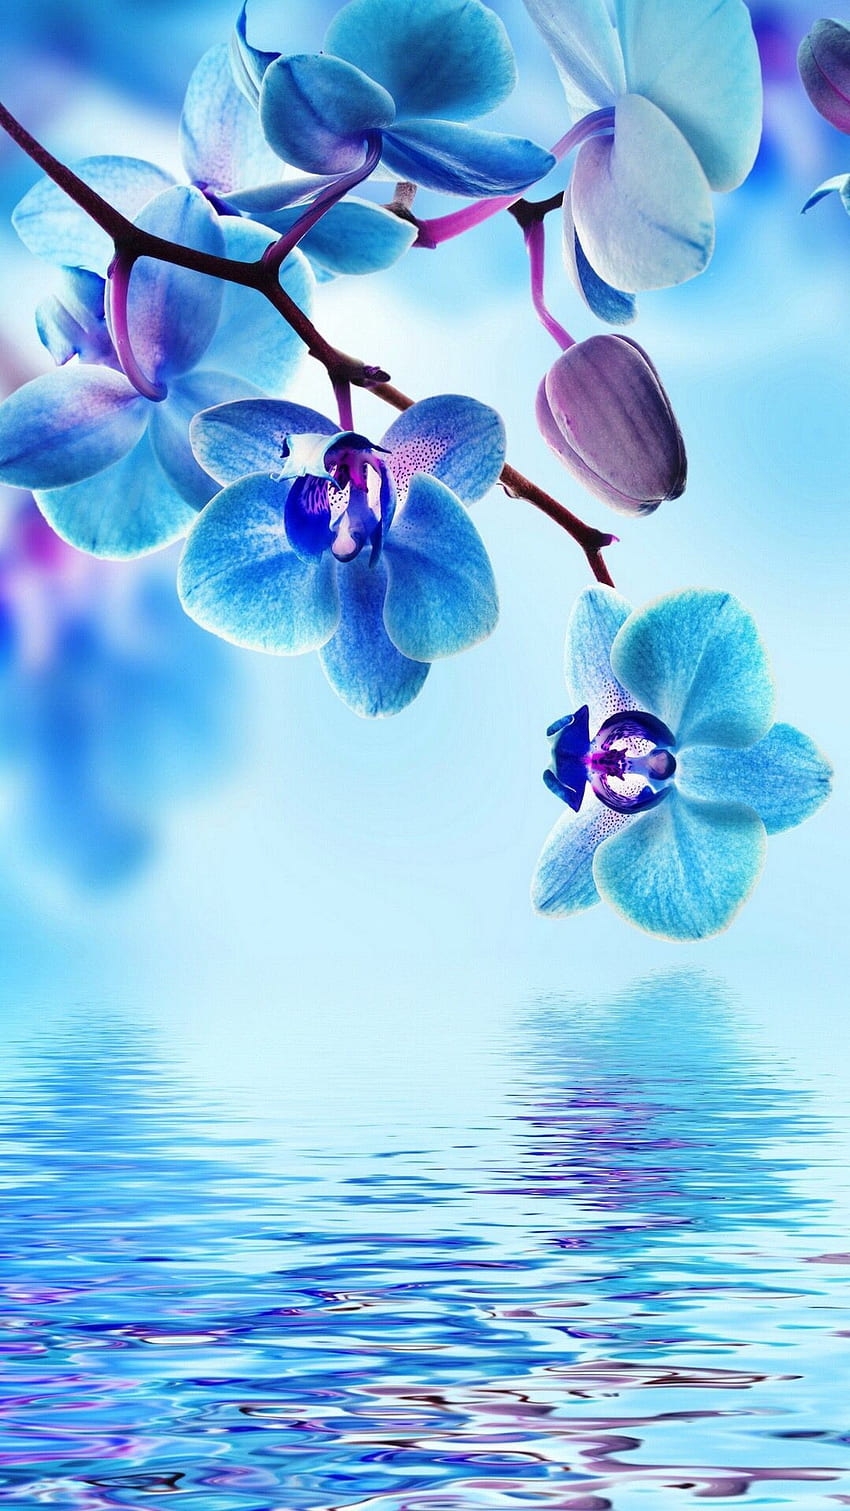 Beautiful Water (Best Beautiful Water and ) di Chat, Cute Water wallpaper ponsel HD